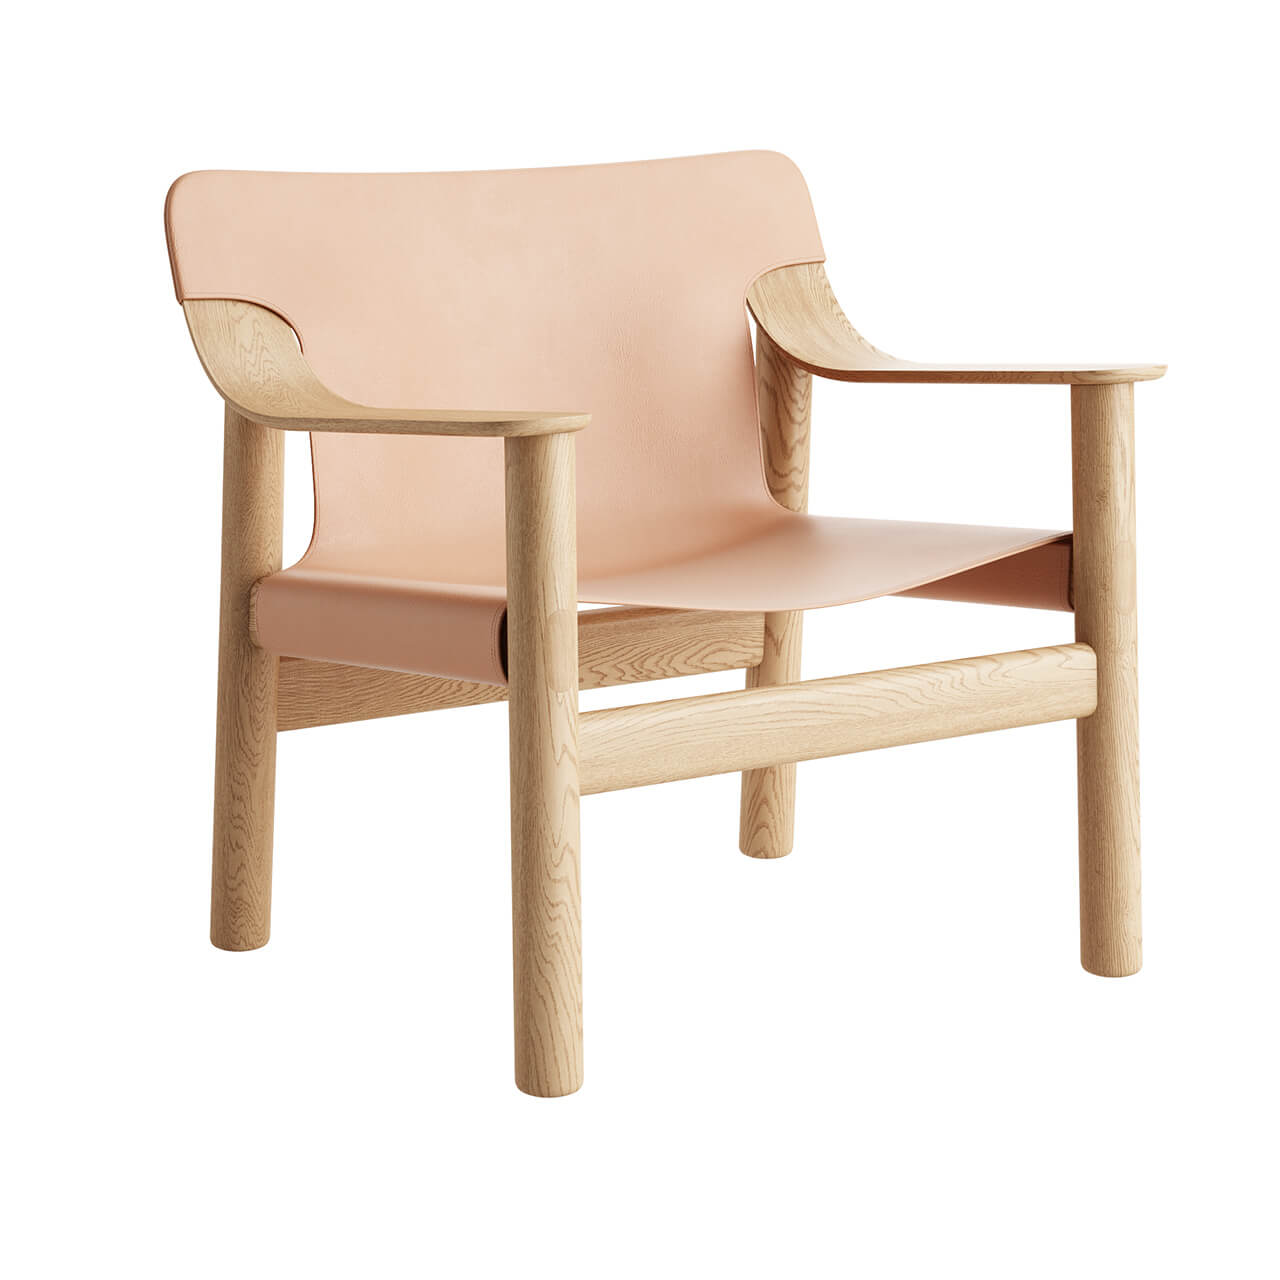 Bernard实木框架清新现代休闲扶手椅3D模型（OBJ,FBX,MAX）